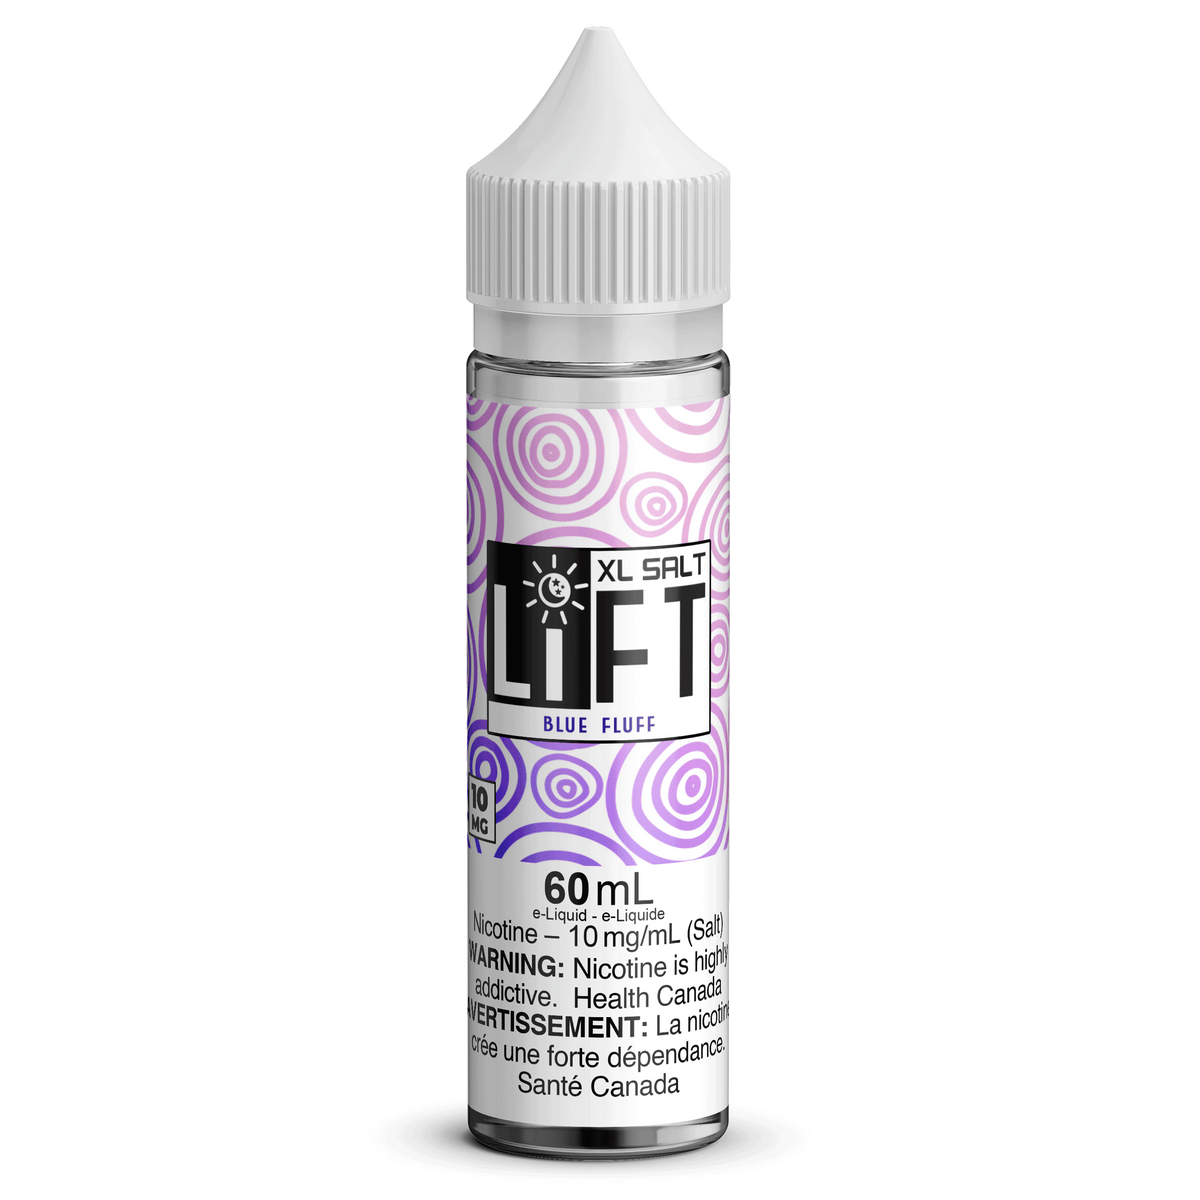 LIFT XL SALT - Blue Fluff available on Canada online vape shop